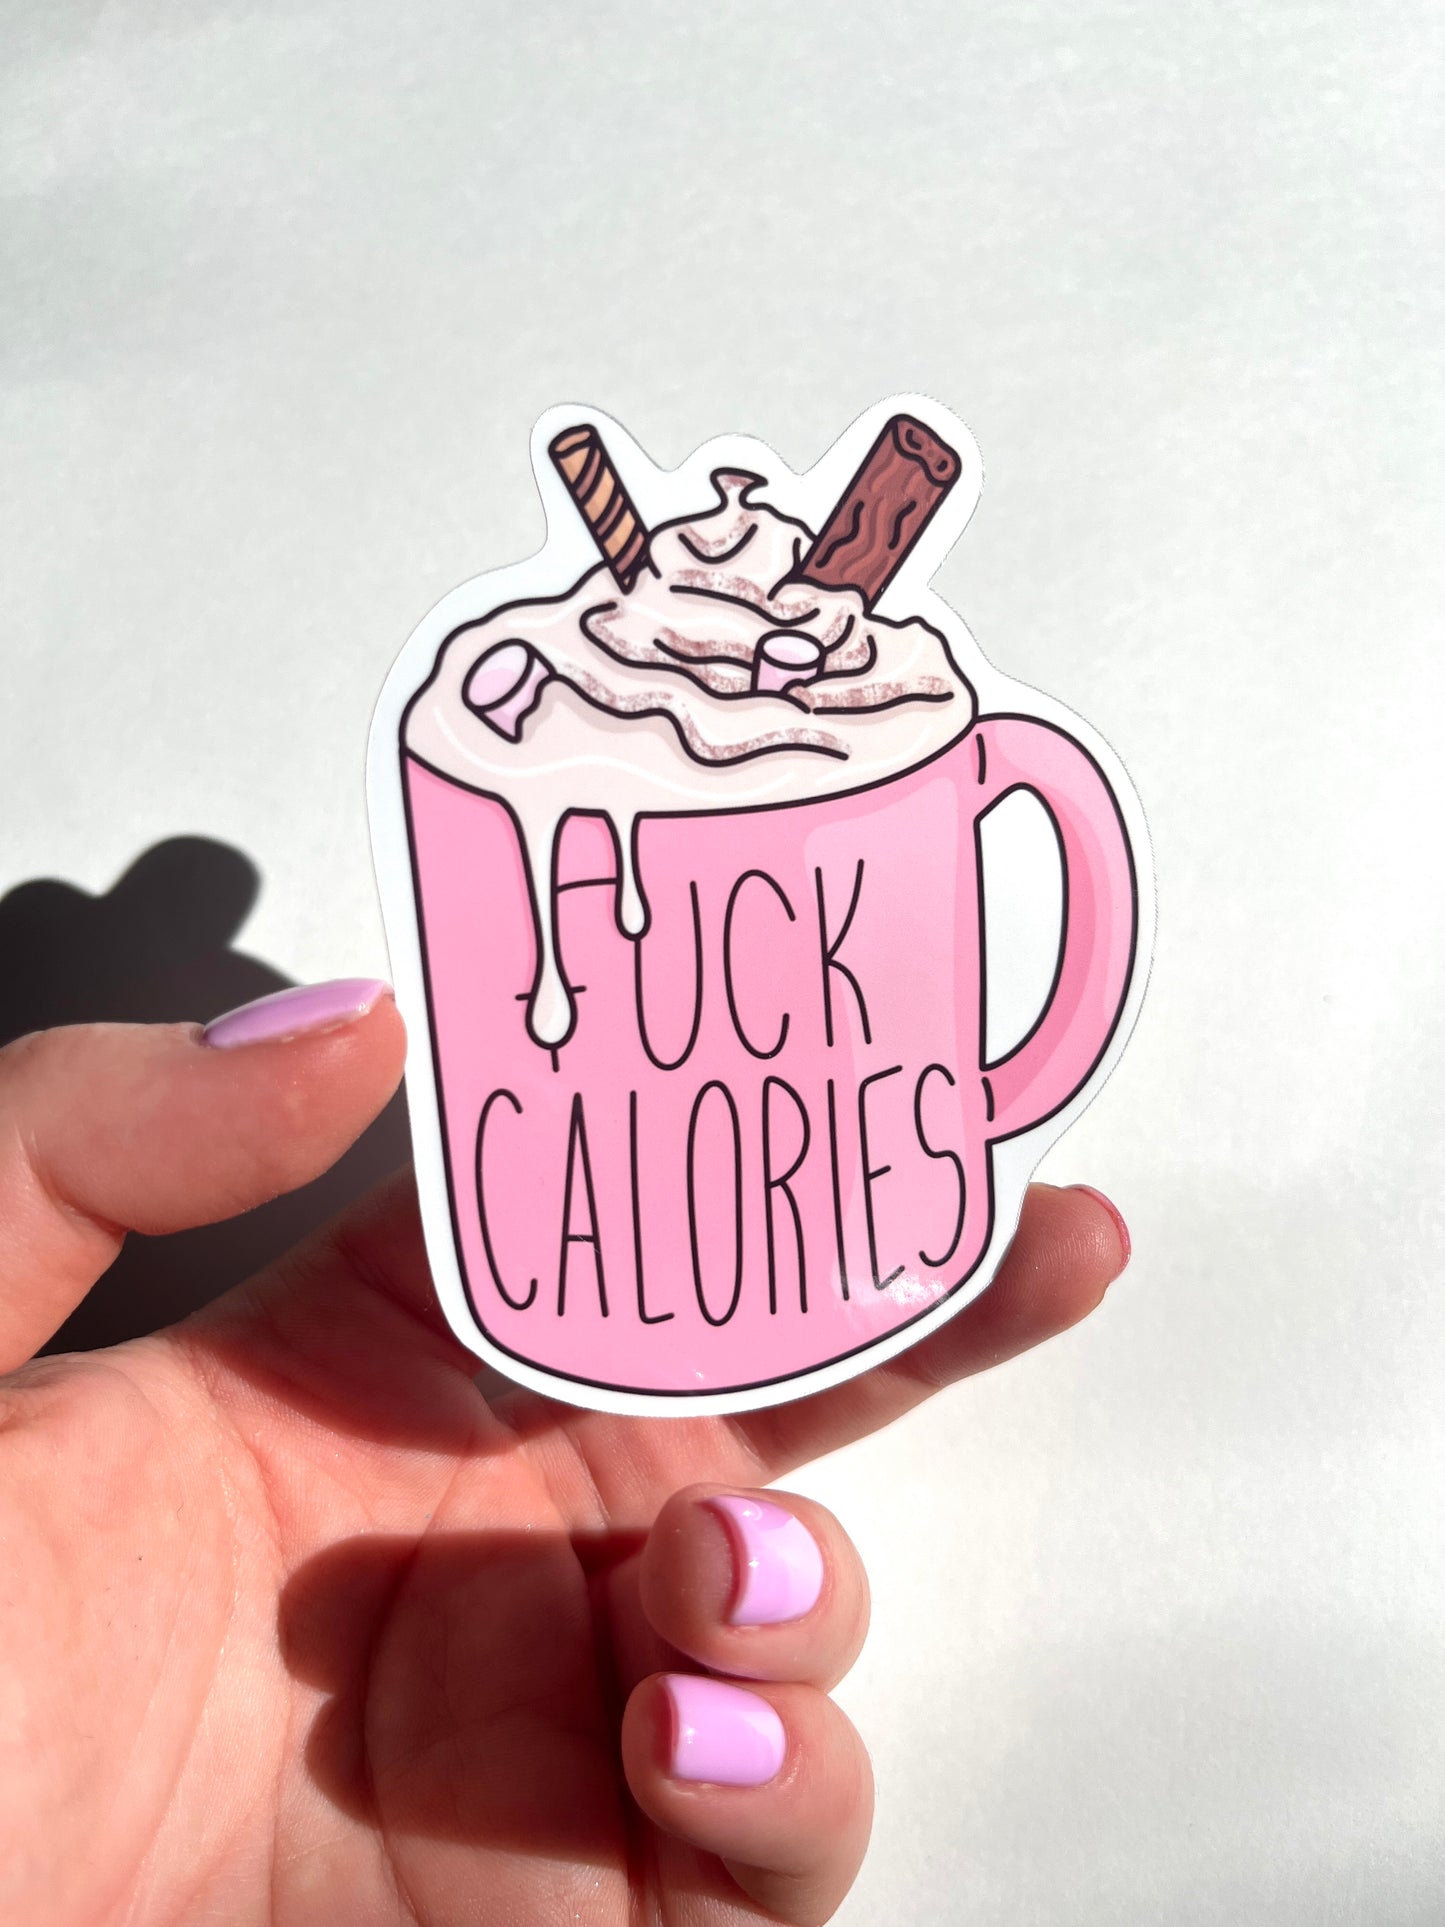 Fuck Calories Sticker